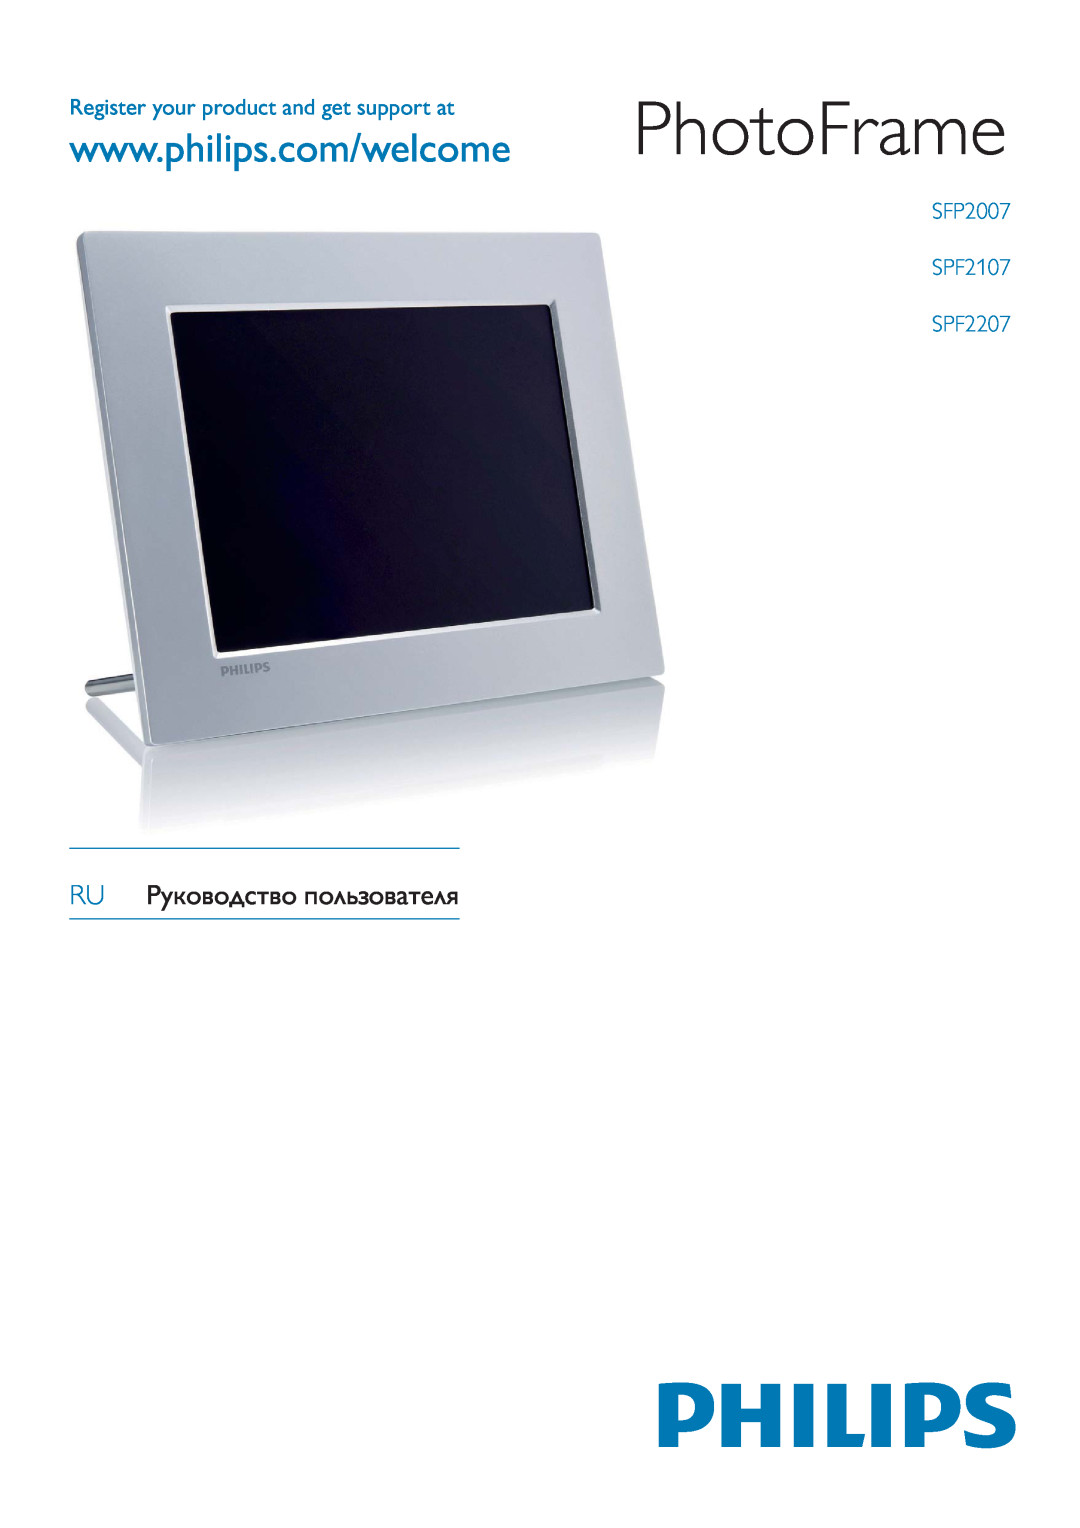 Philips manual 快速入门指南, PhotoFrame, 3 设置, 1 使用入门 2 使用数码相框, SPF2007 SPF2107 SPF2207 